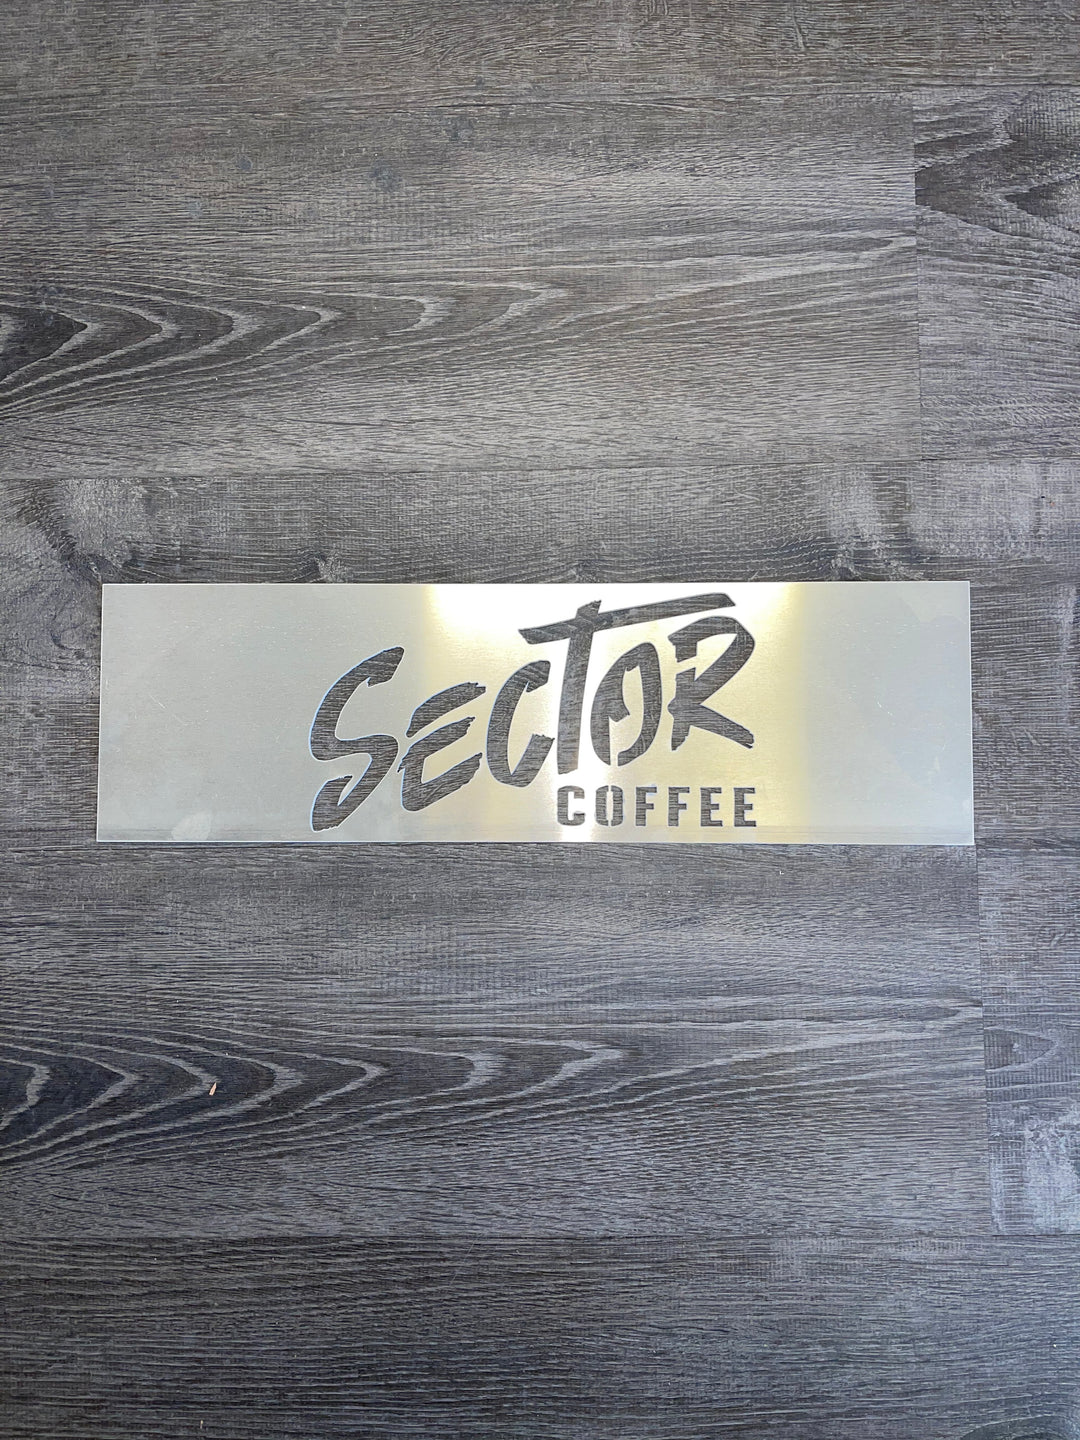 Sector Coffee Brand Plate